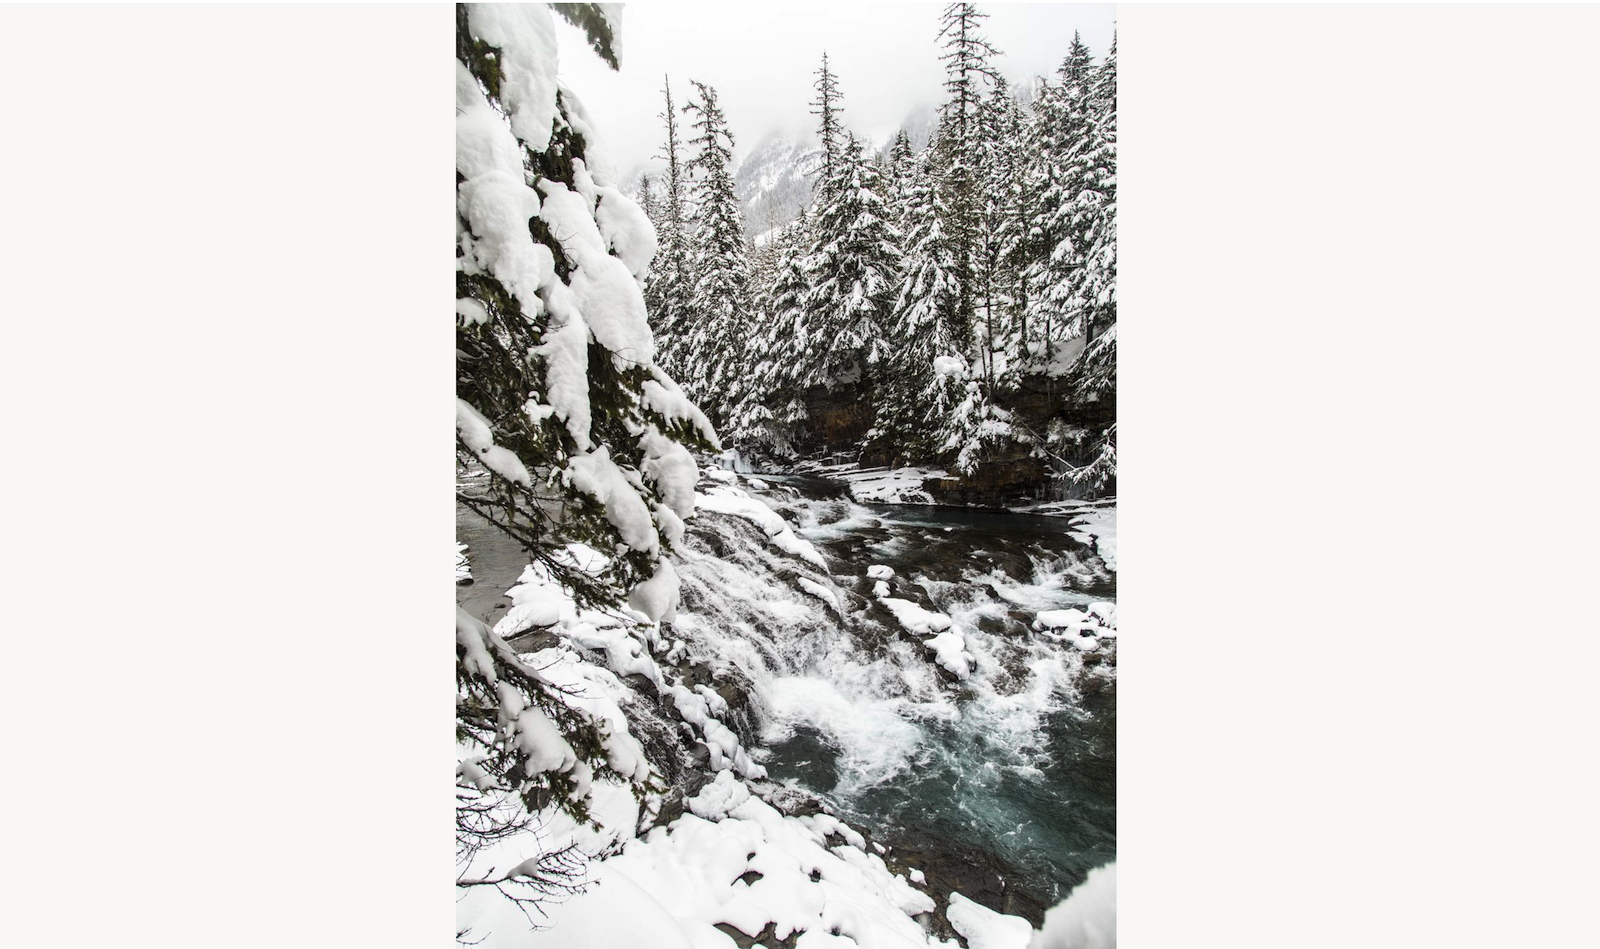 A semi-frozen waterfall in Montana's Glacier National Park